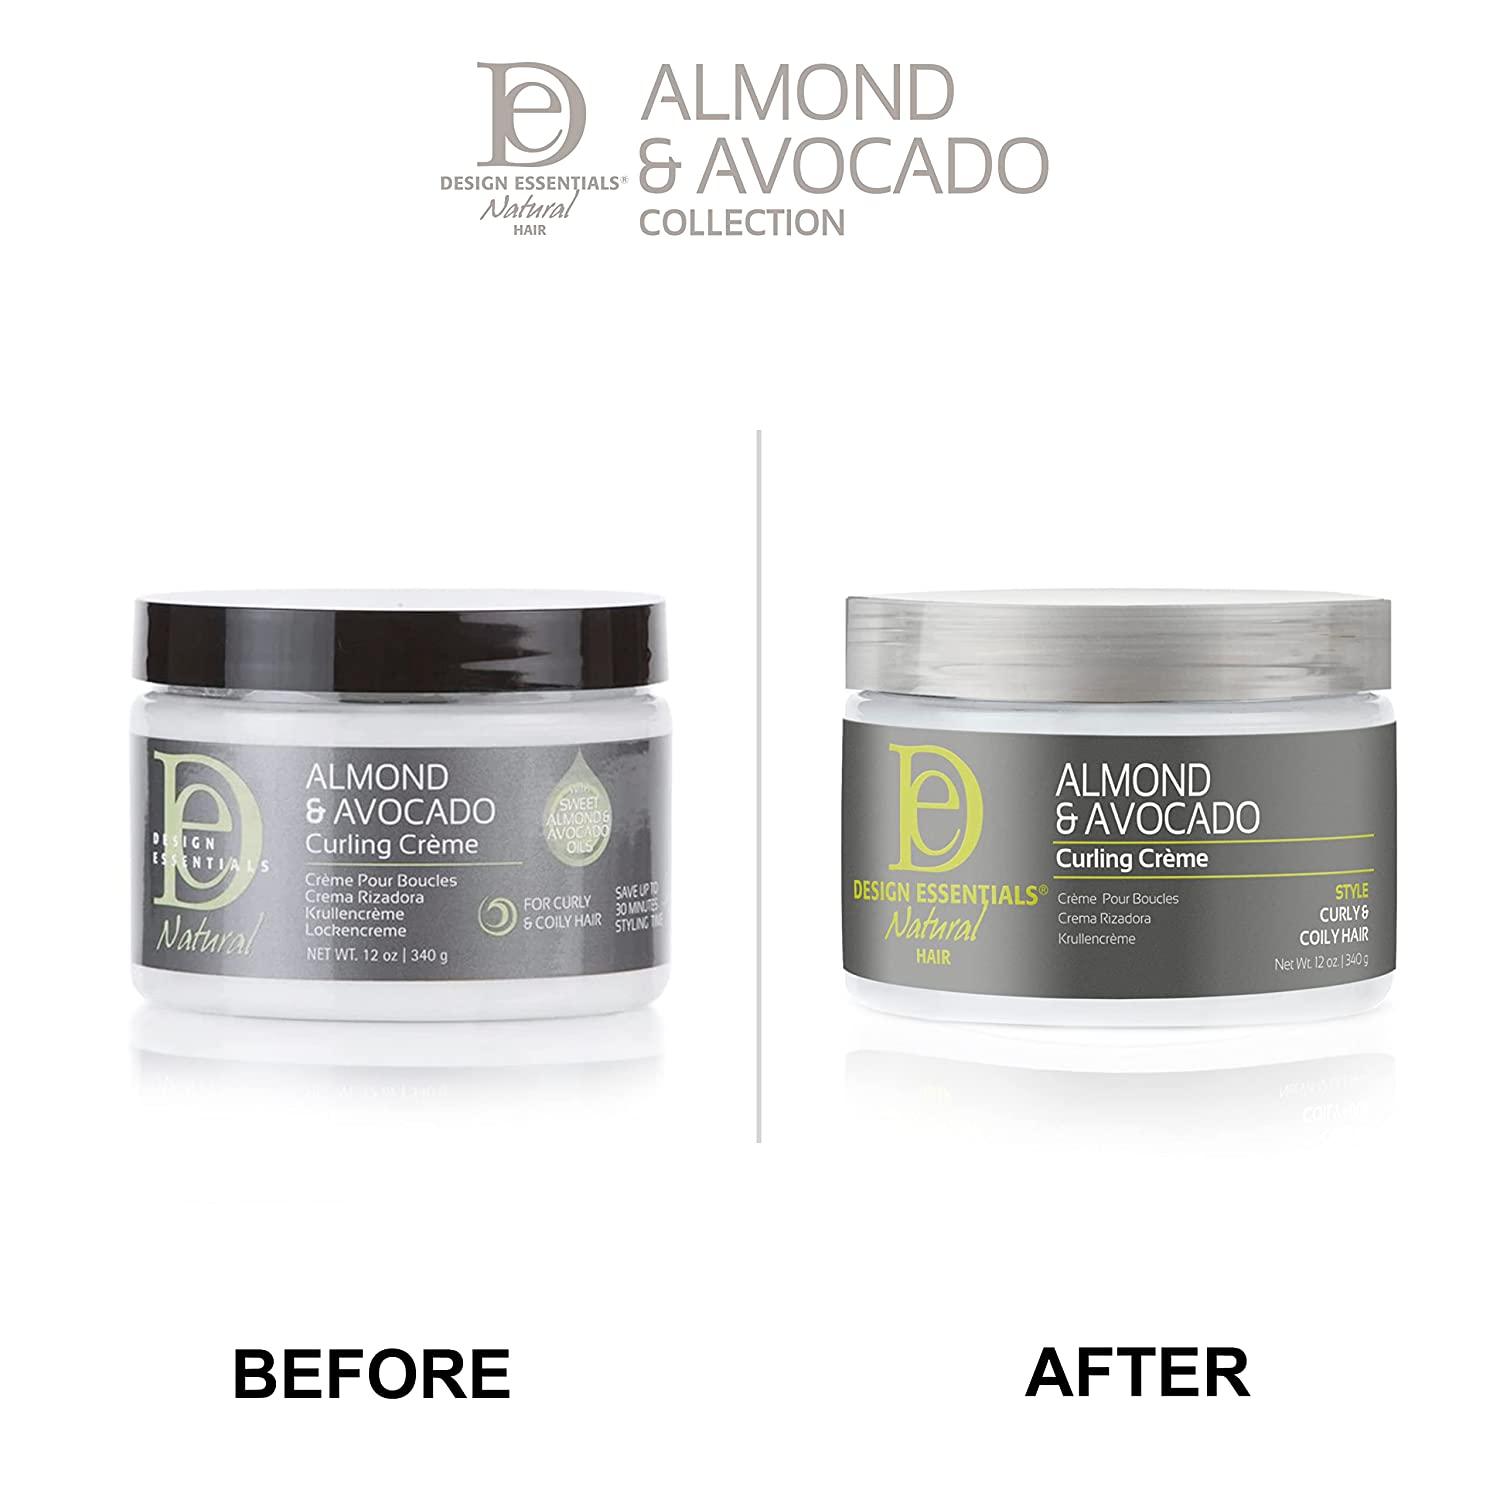  Design Essentials Natural Almond & Avocado Wash Day Deep  Moisture Masque, 12 Ounce : Beauty & Personal Care